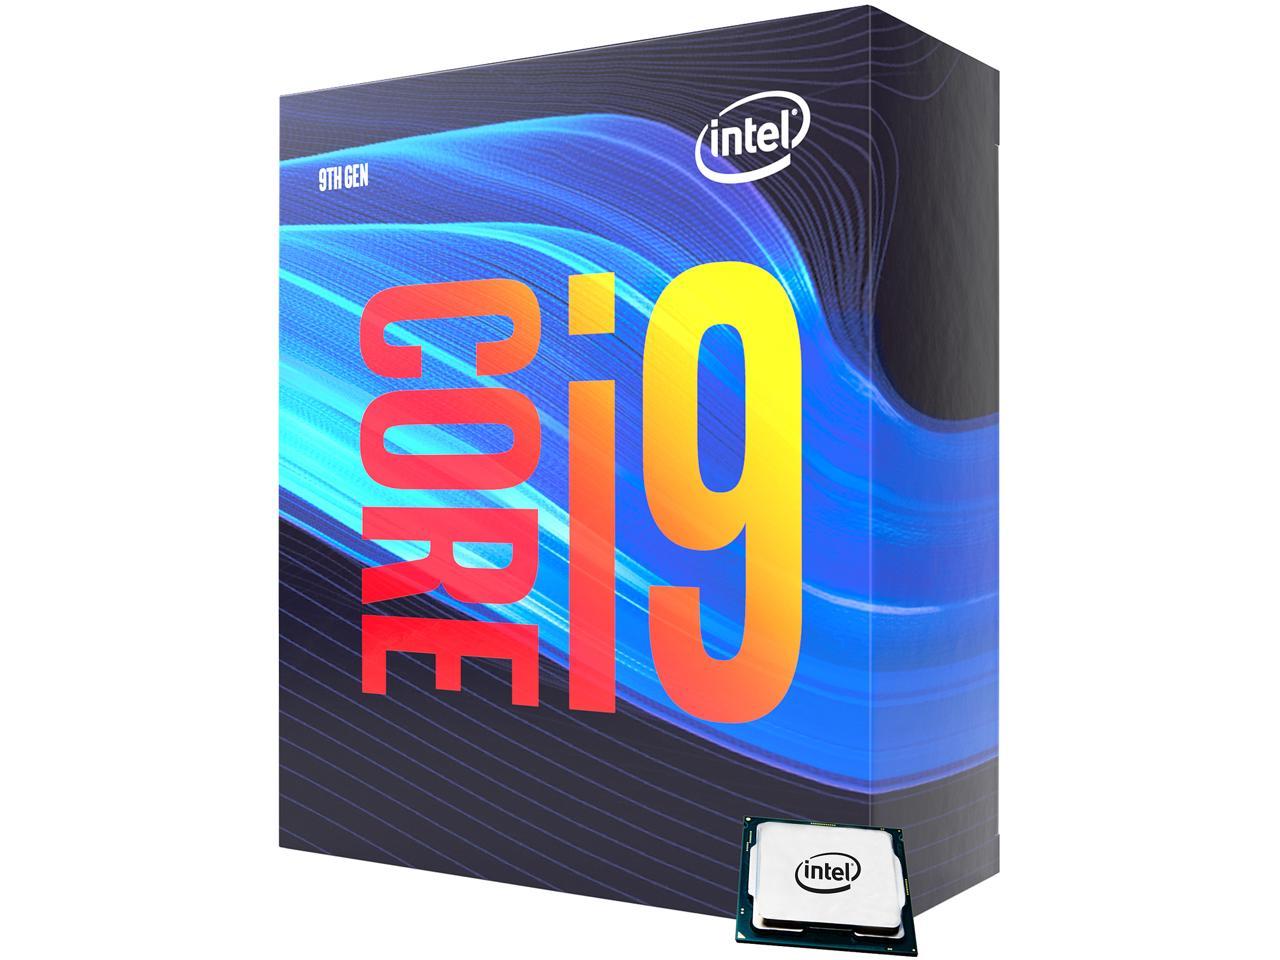 Intel Core i9 9900 3.10 GHZ, Turbo @ 5.0GHZ, 8 Core, 16 Thread, 16MB Smartcache, 65W TDP.